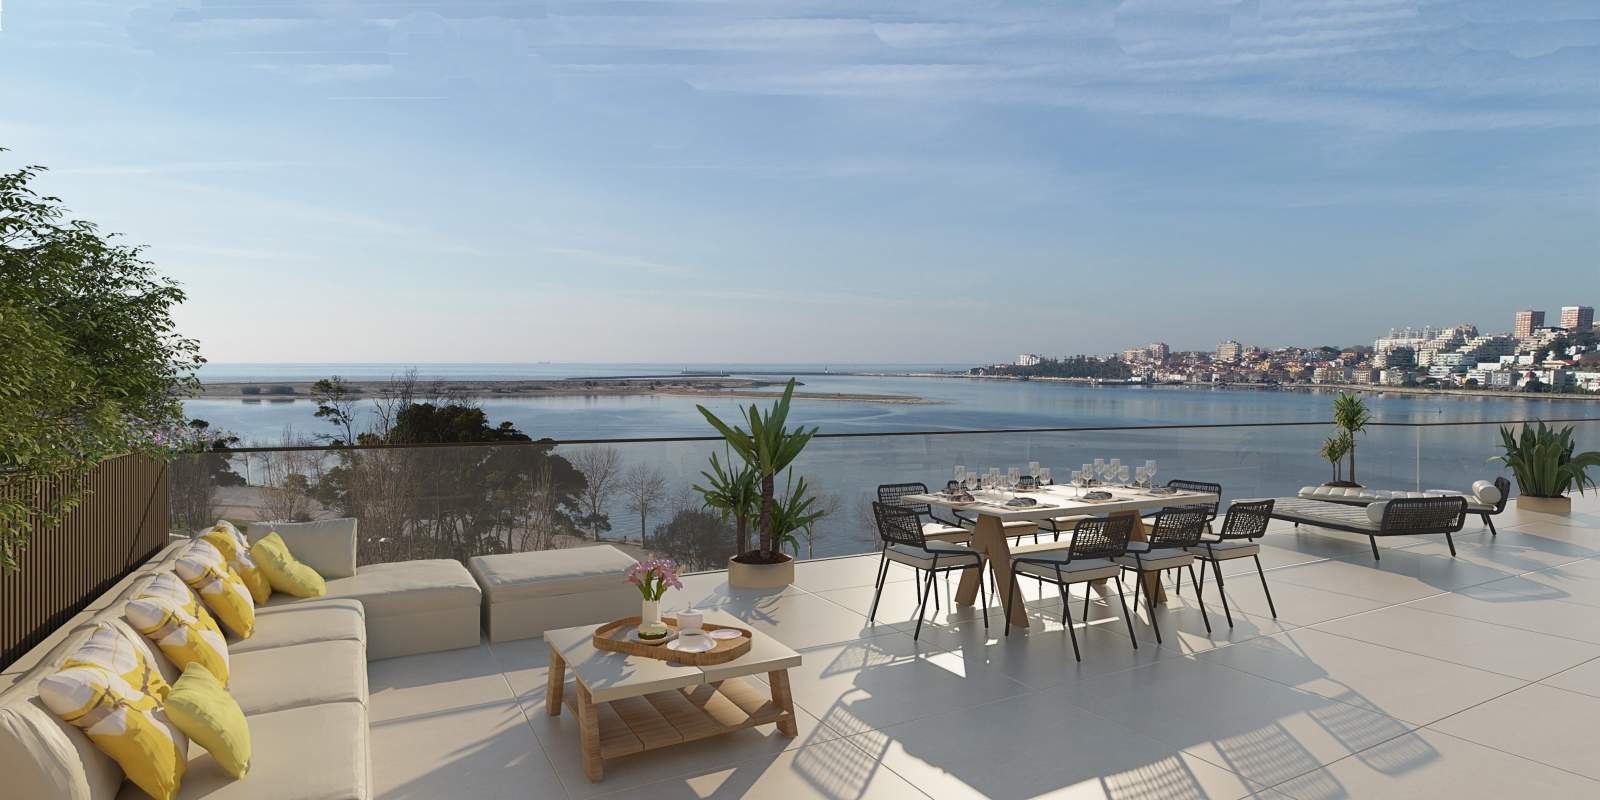 Apartment for sale with terrace, in exclusive condominium, V. N. Gaia, Porto, Portugal_175437